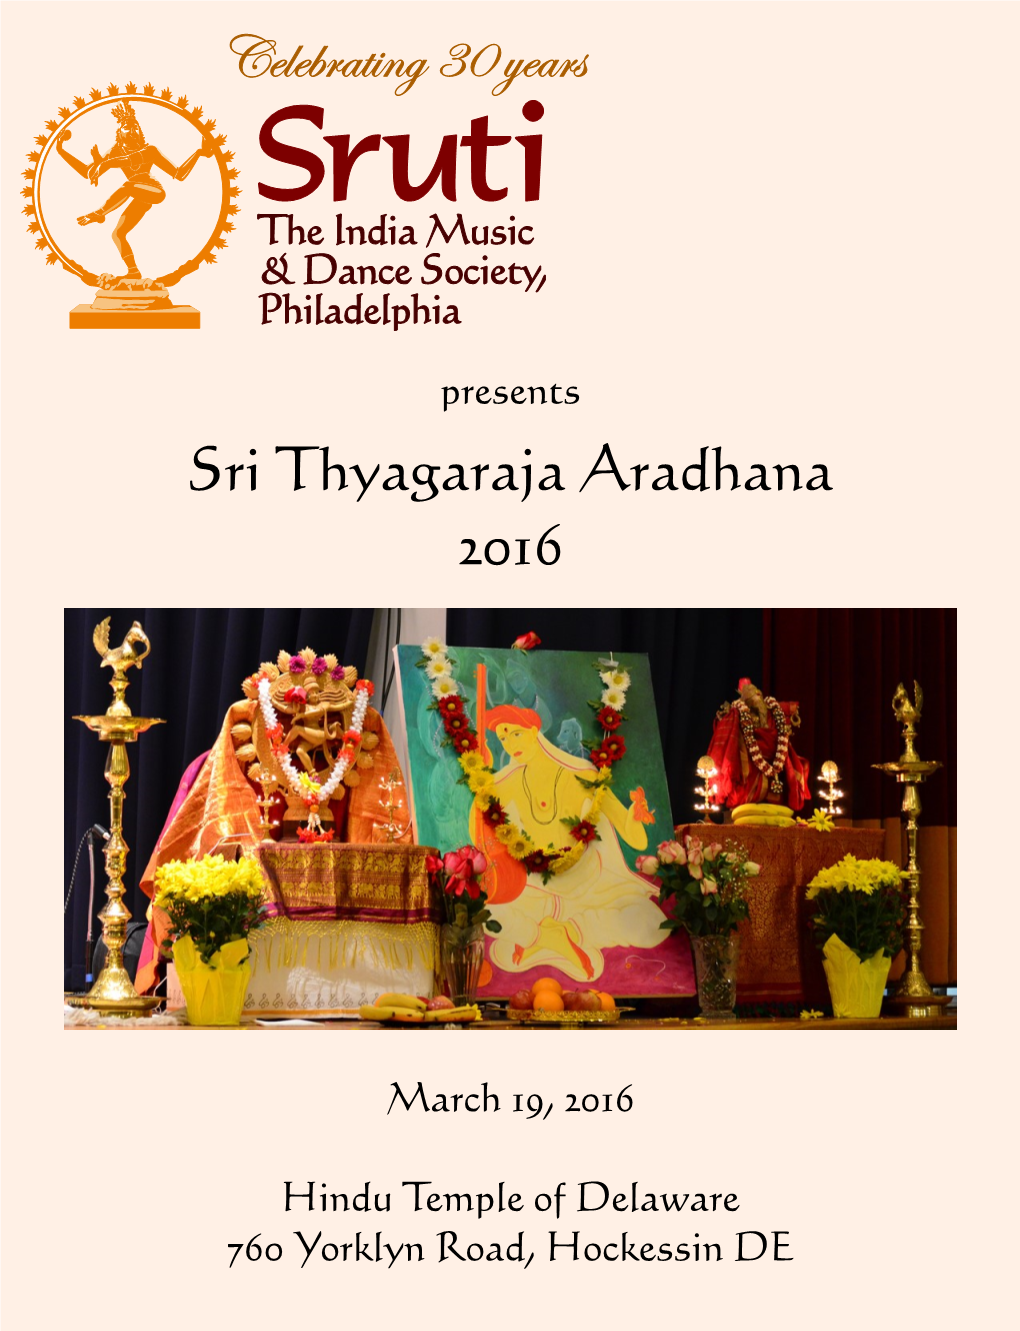 Sri Thyagaraja Aradhana 2016 Celebrating 30 Years